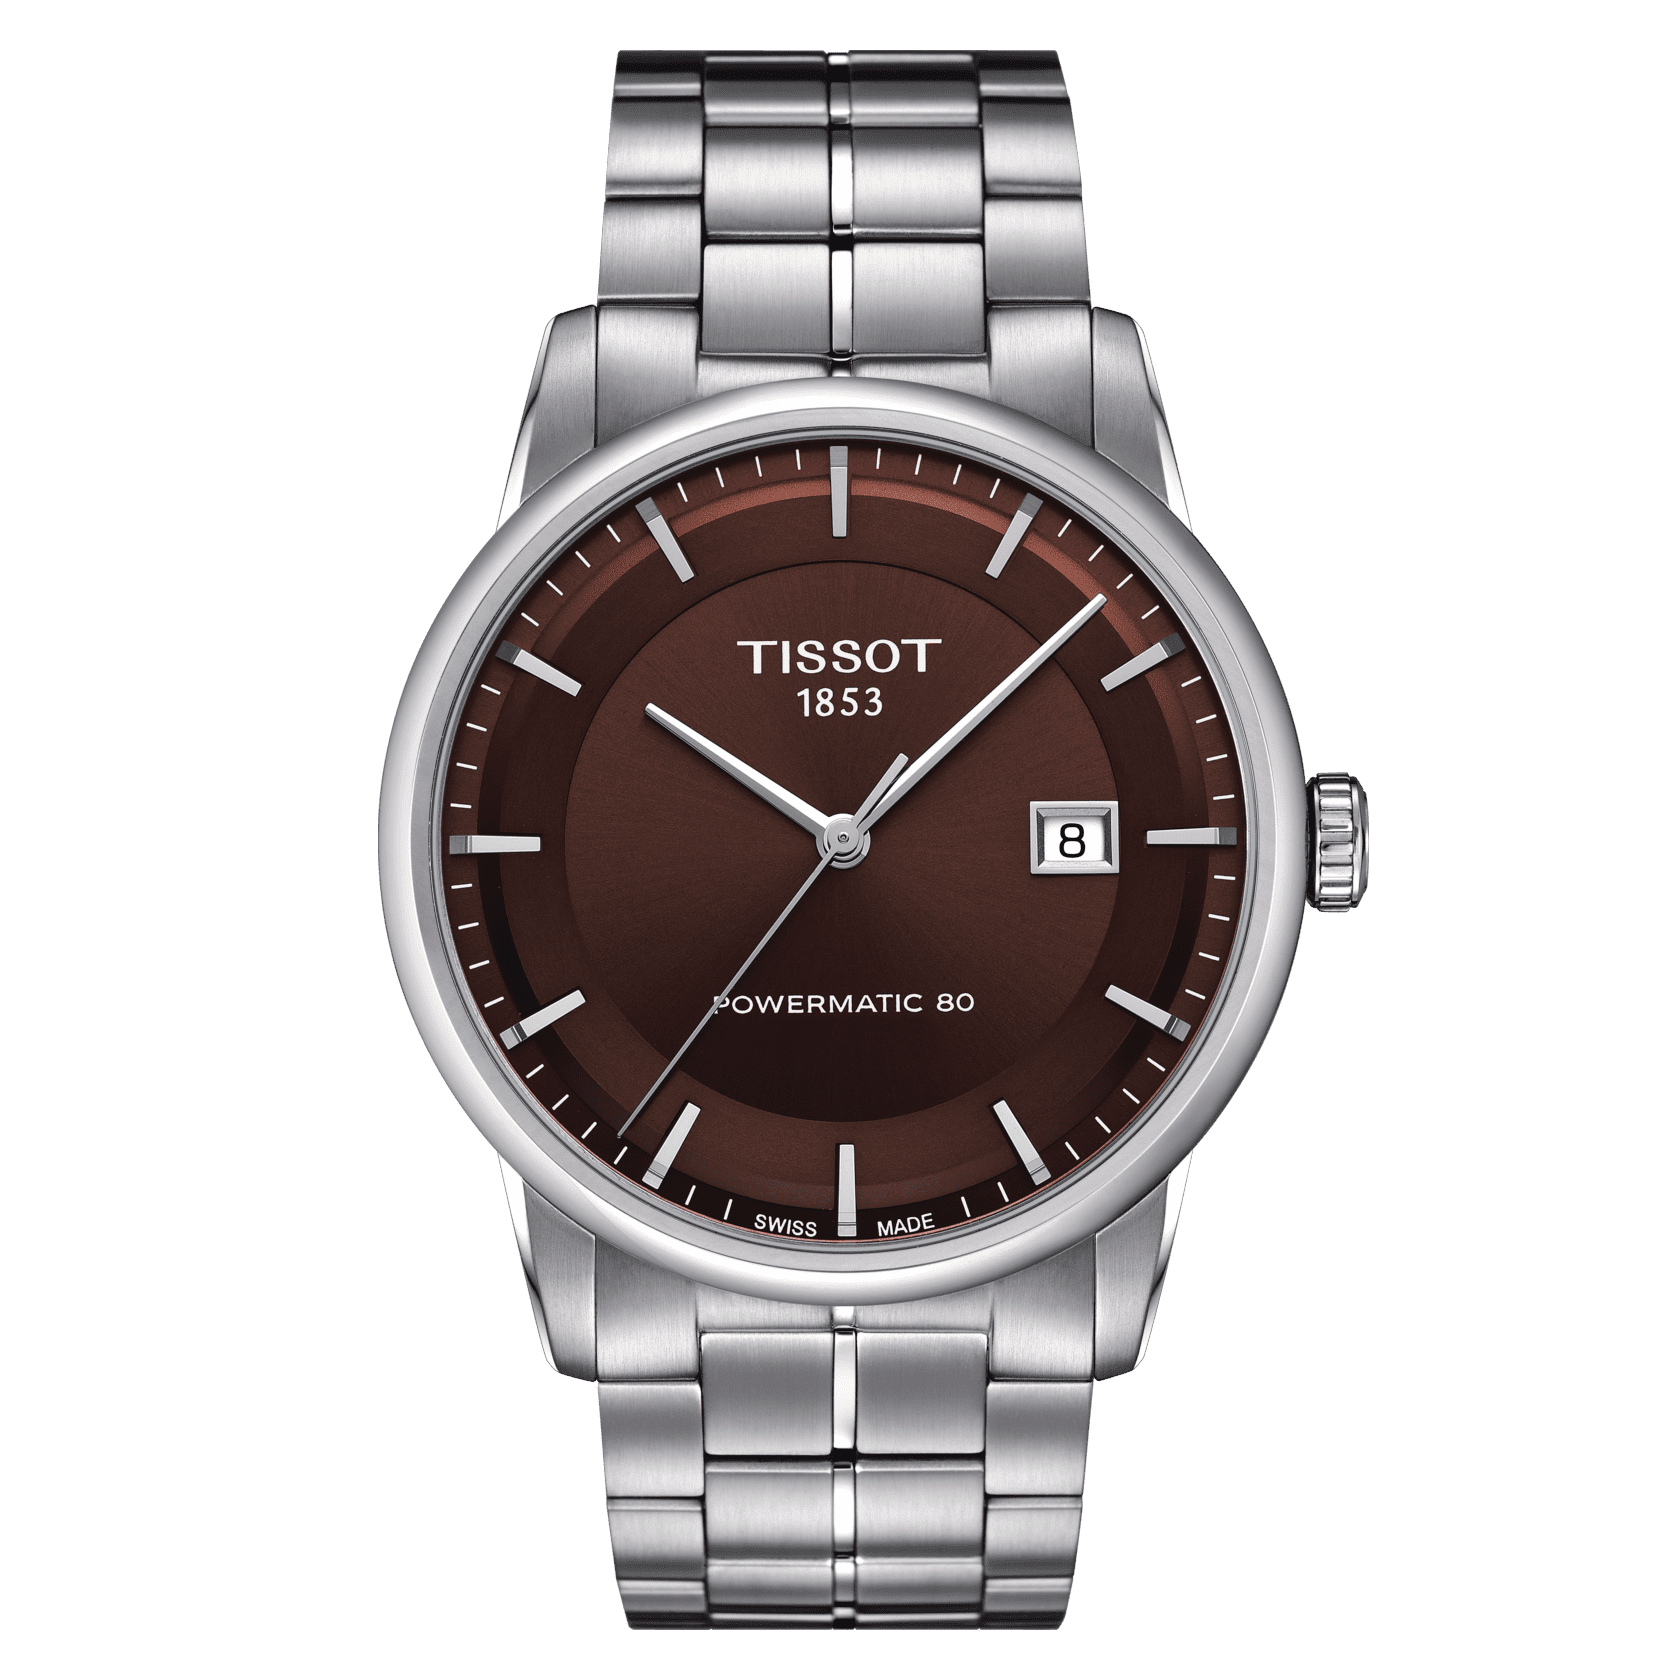 Replica Rolex Watches Wholesale